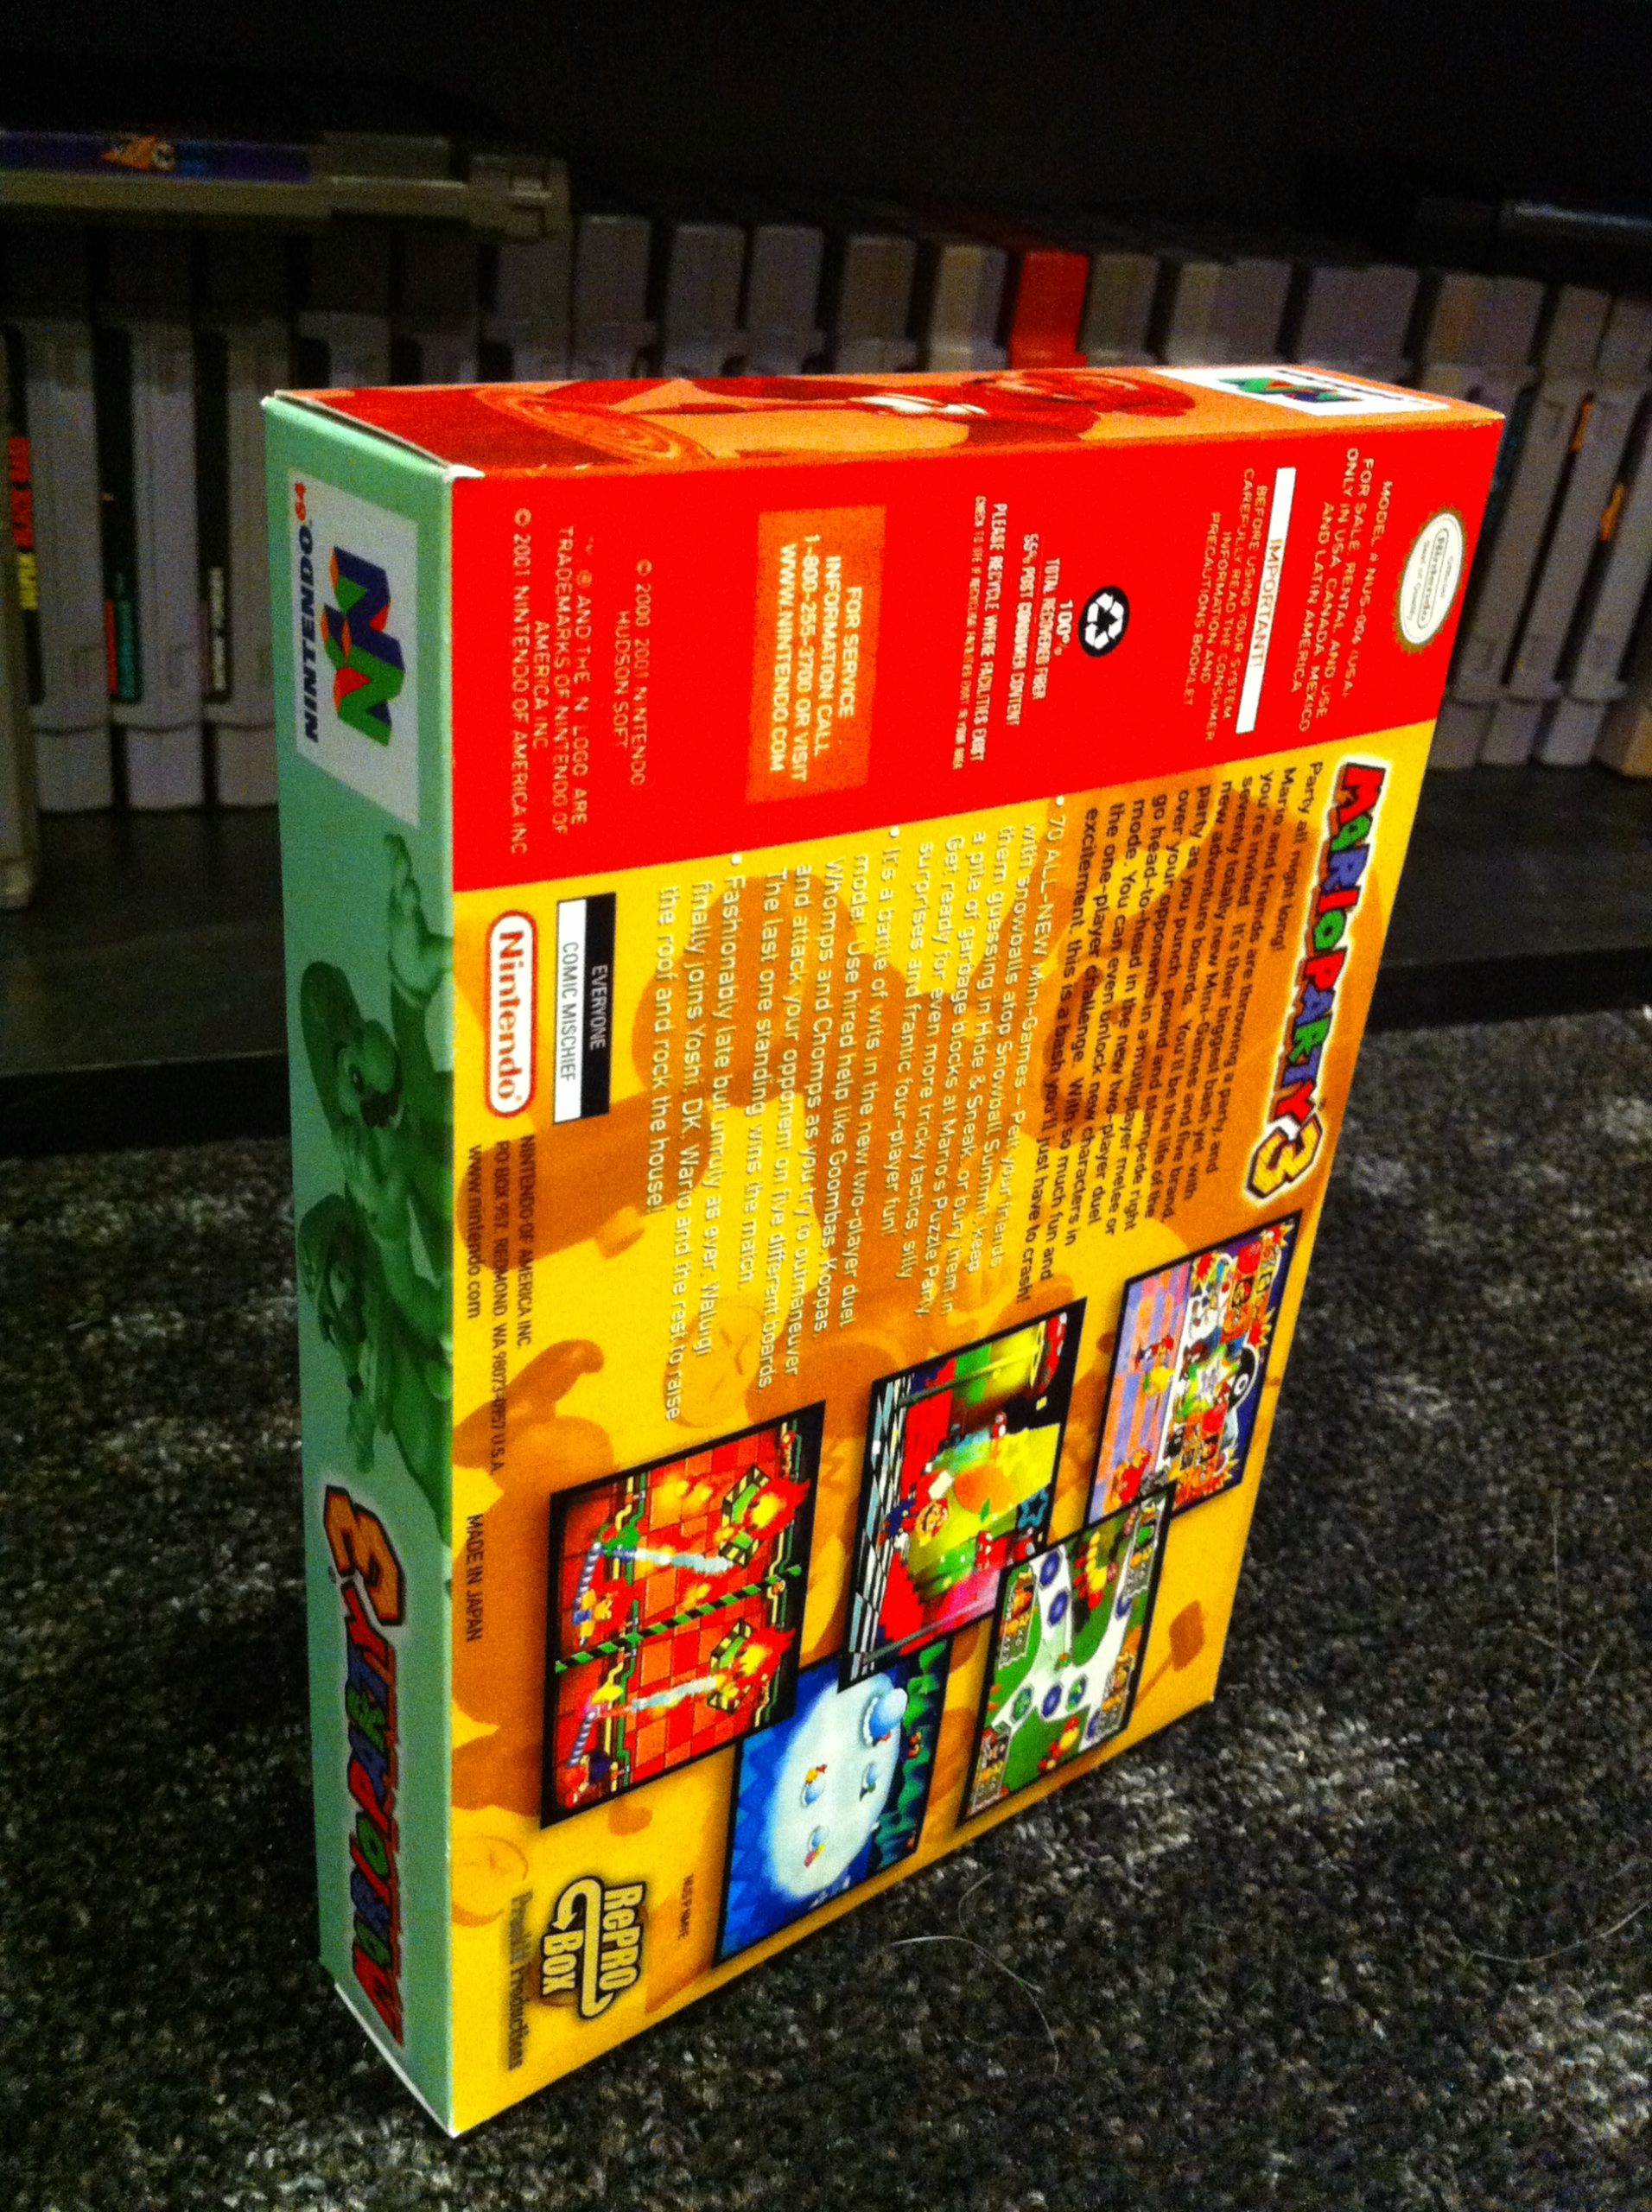 Mario Party 6 Box Art